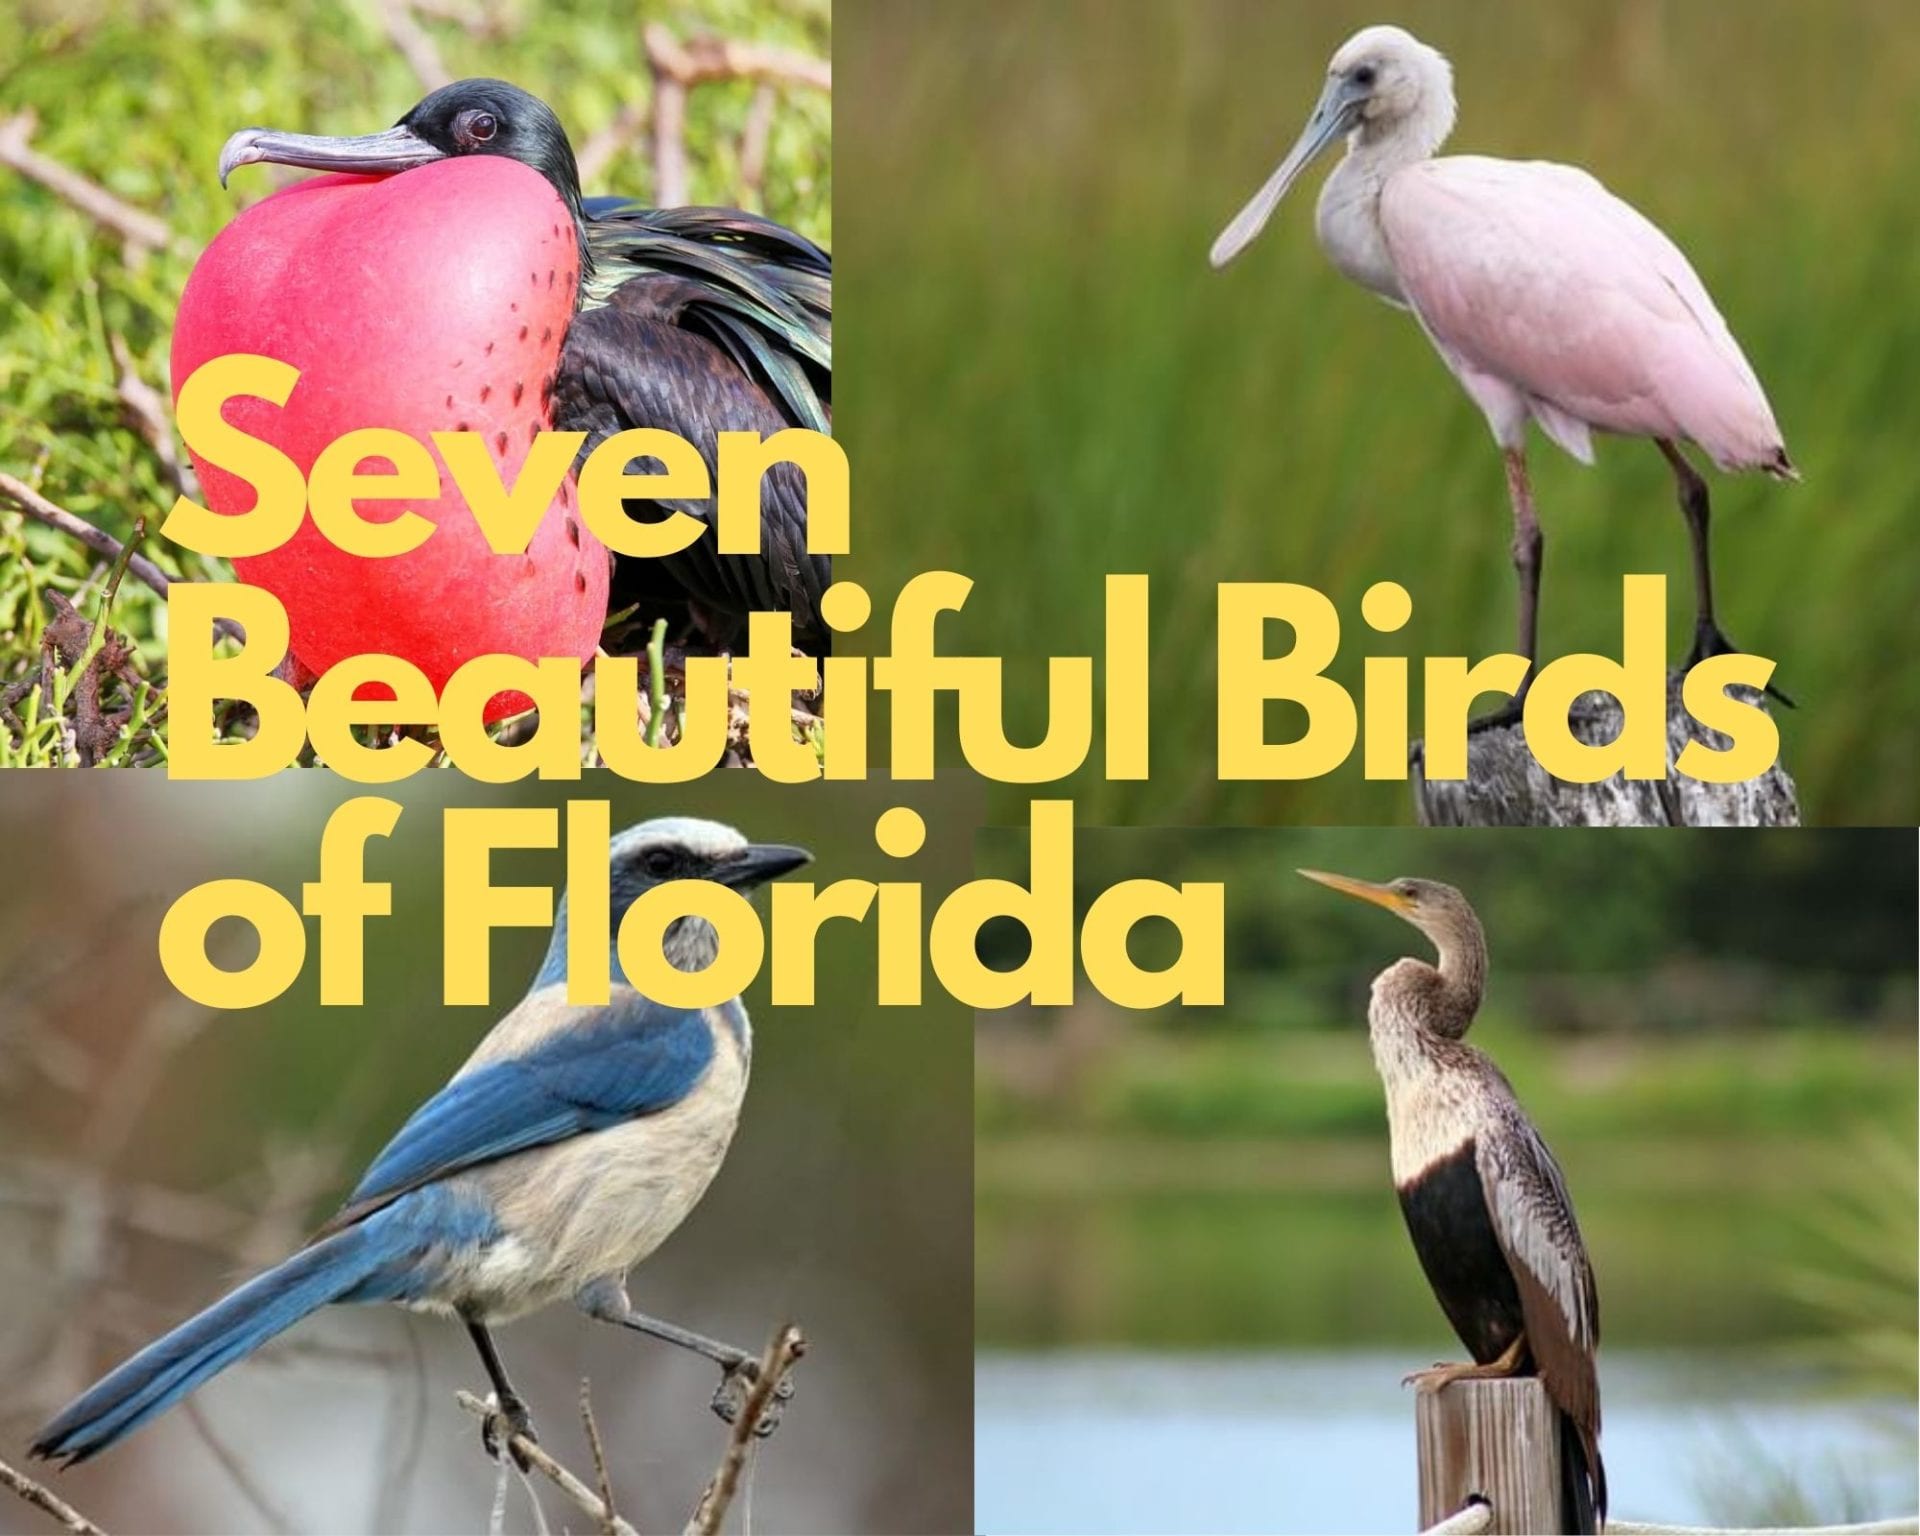 birds of florida